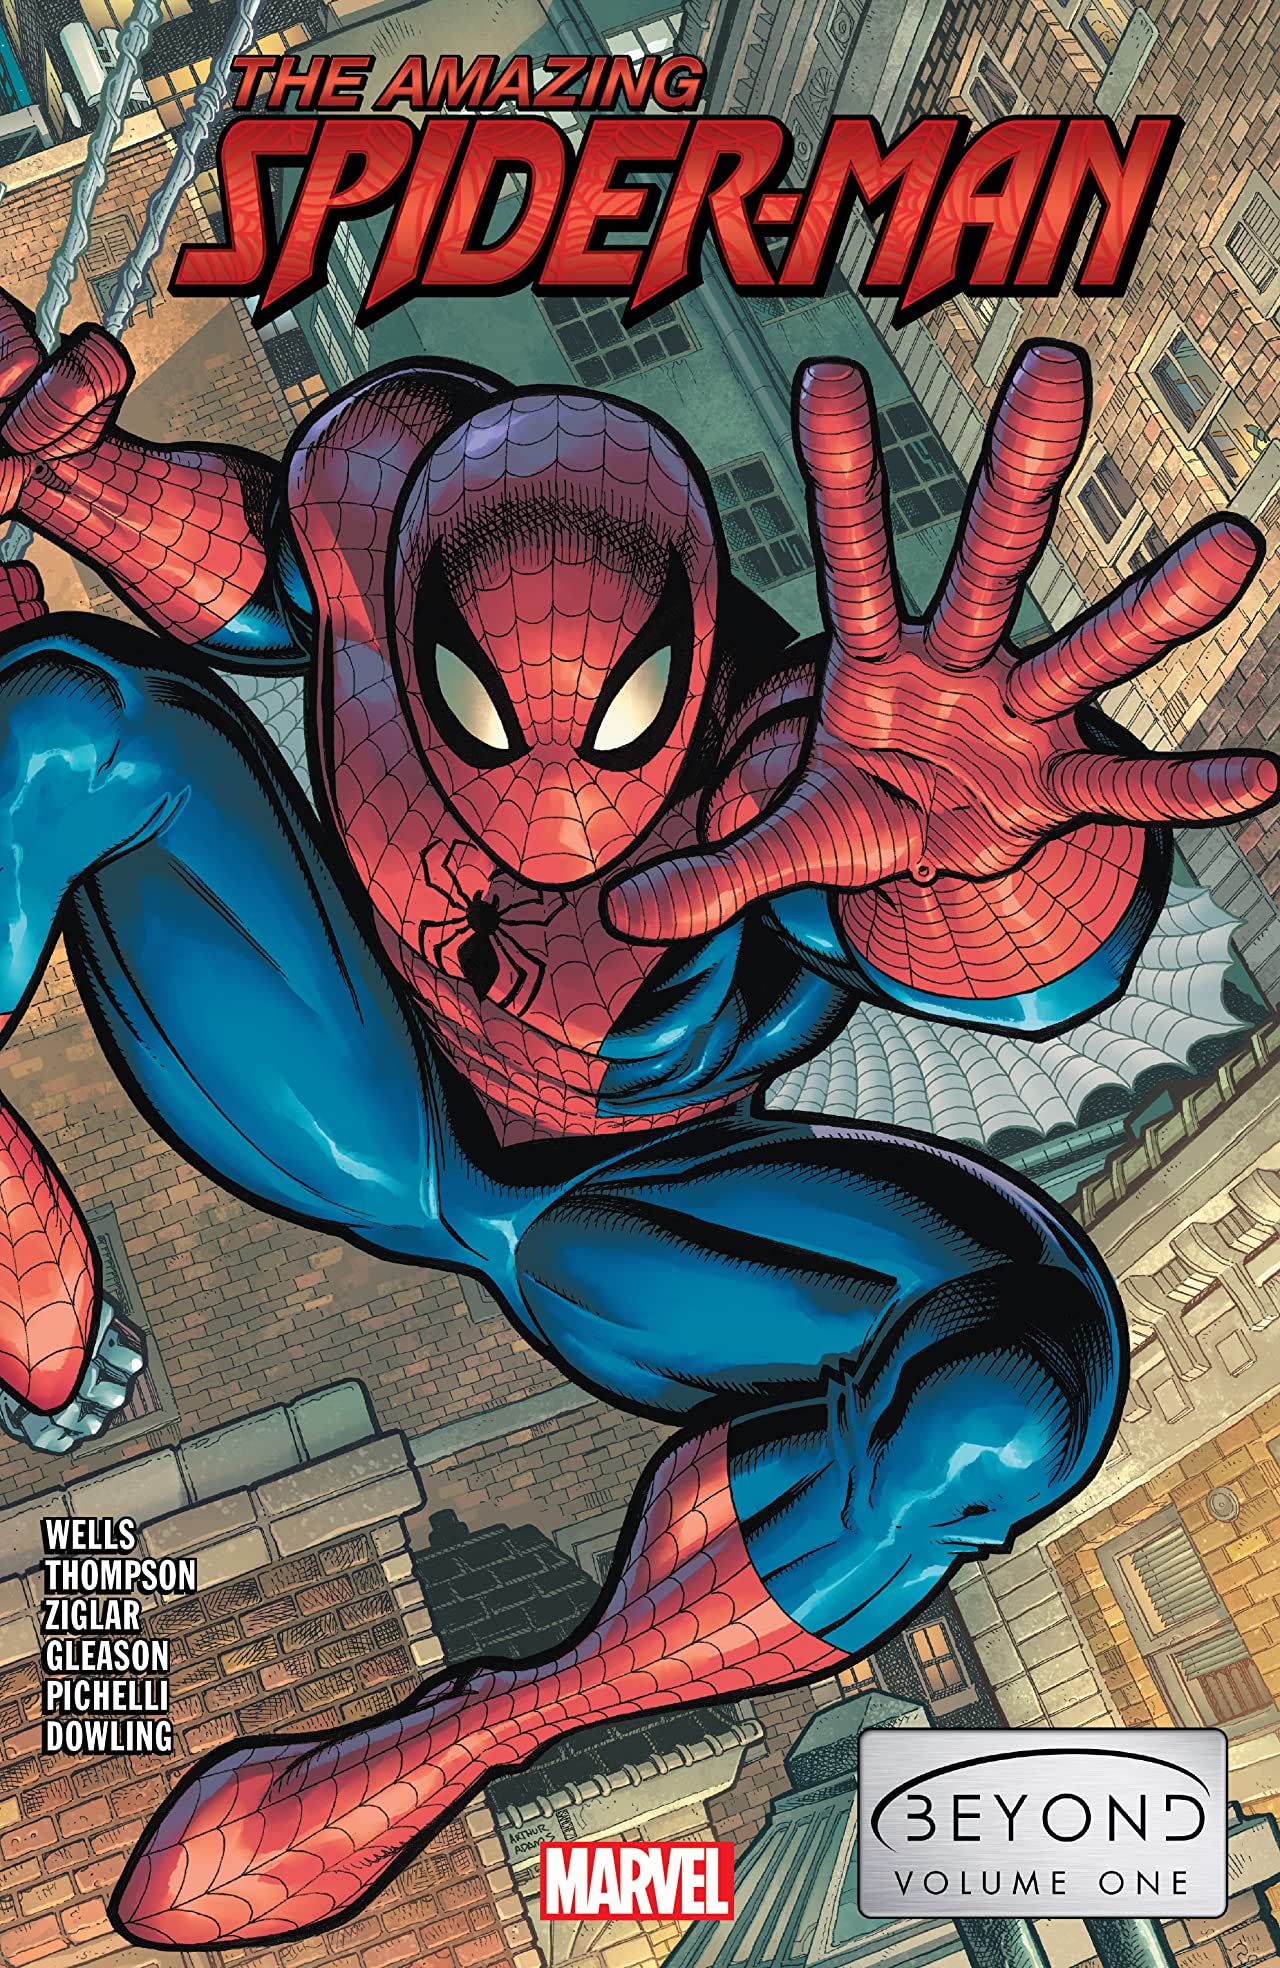 Amazing Spider-Man: Beyond Vol. 1 (Trade Paperback)